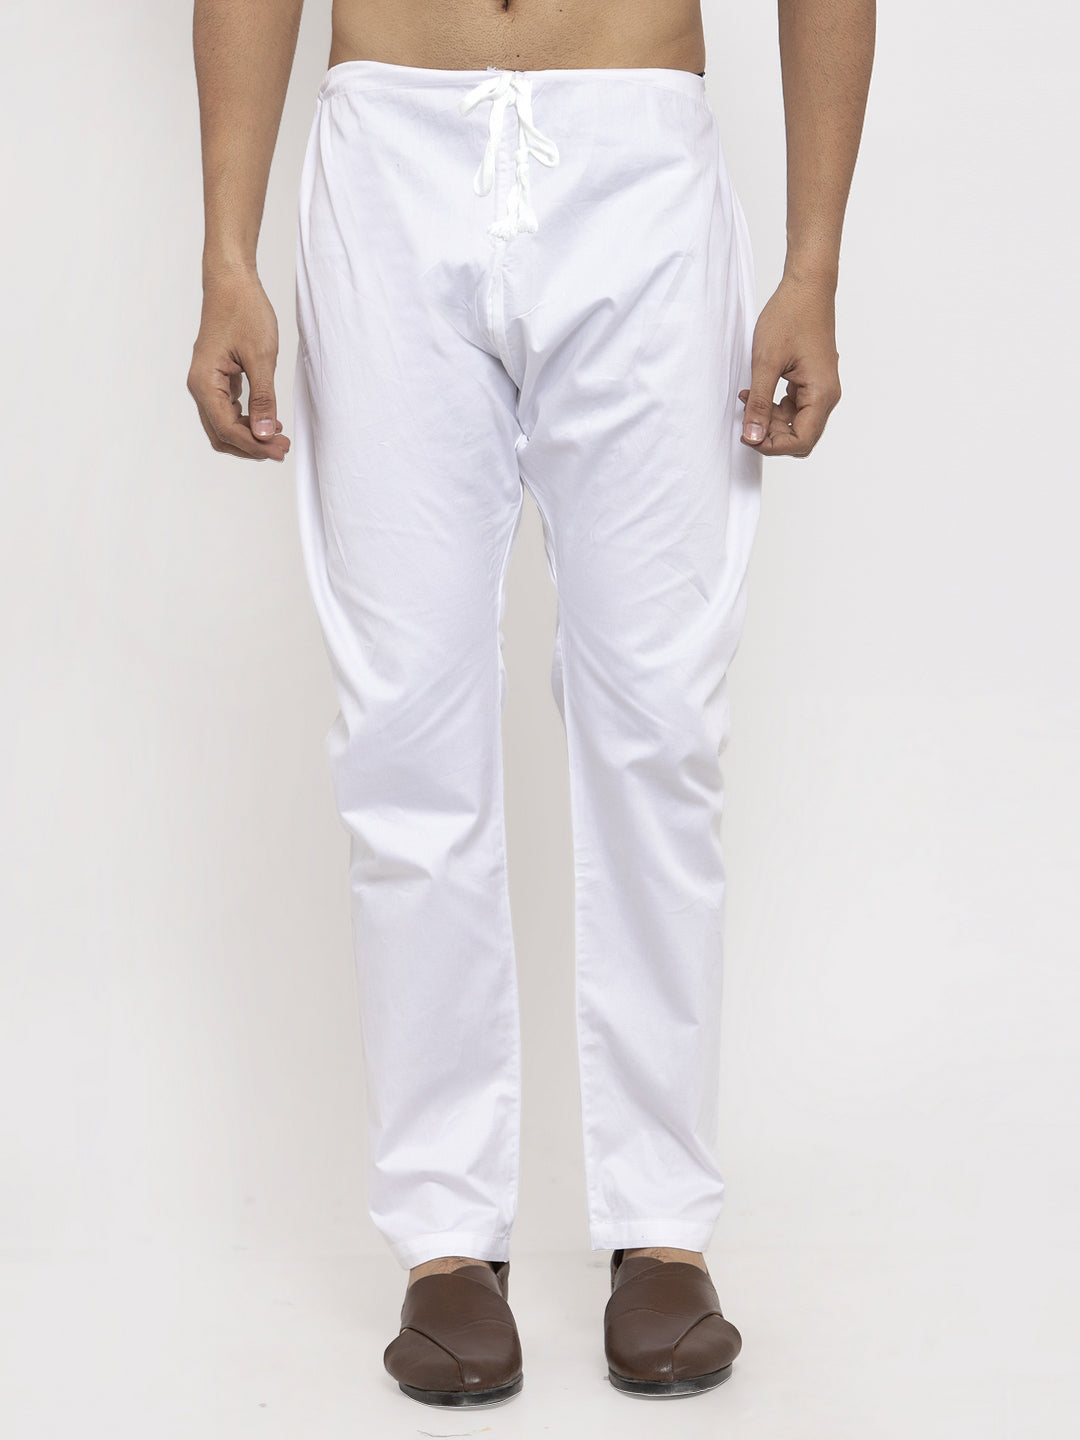 KLOTTHE Set of 2 White Cotton Solid Pyjamas